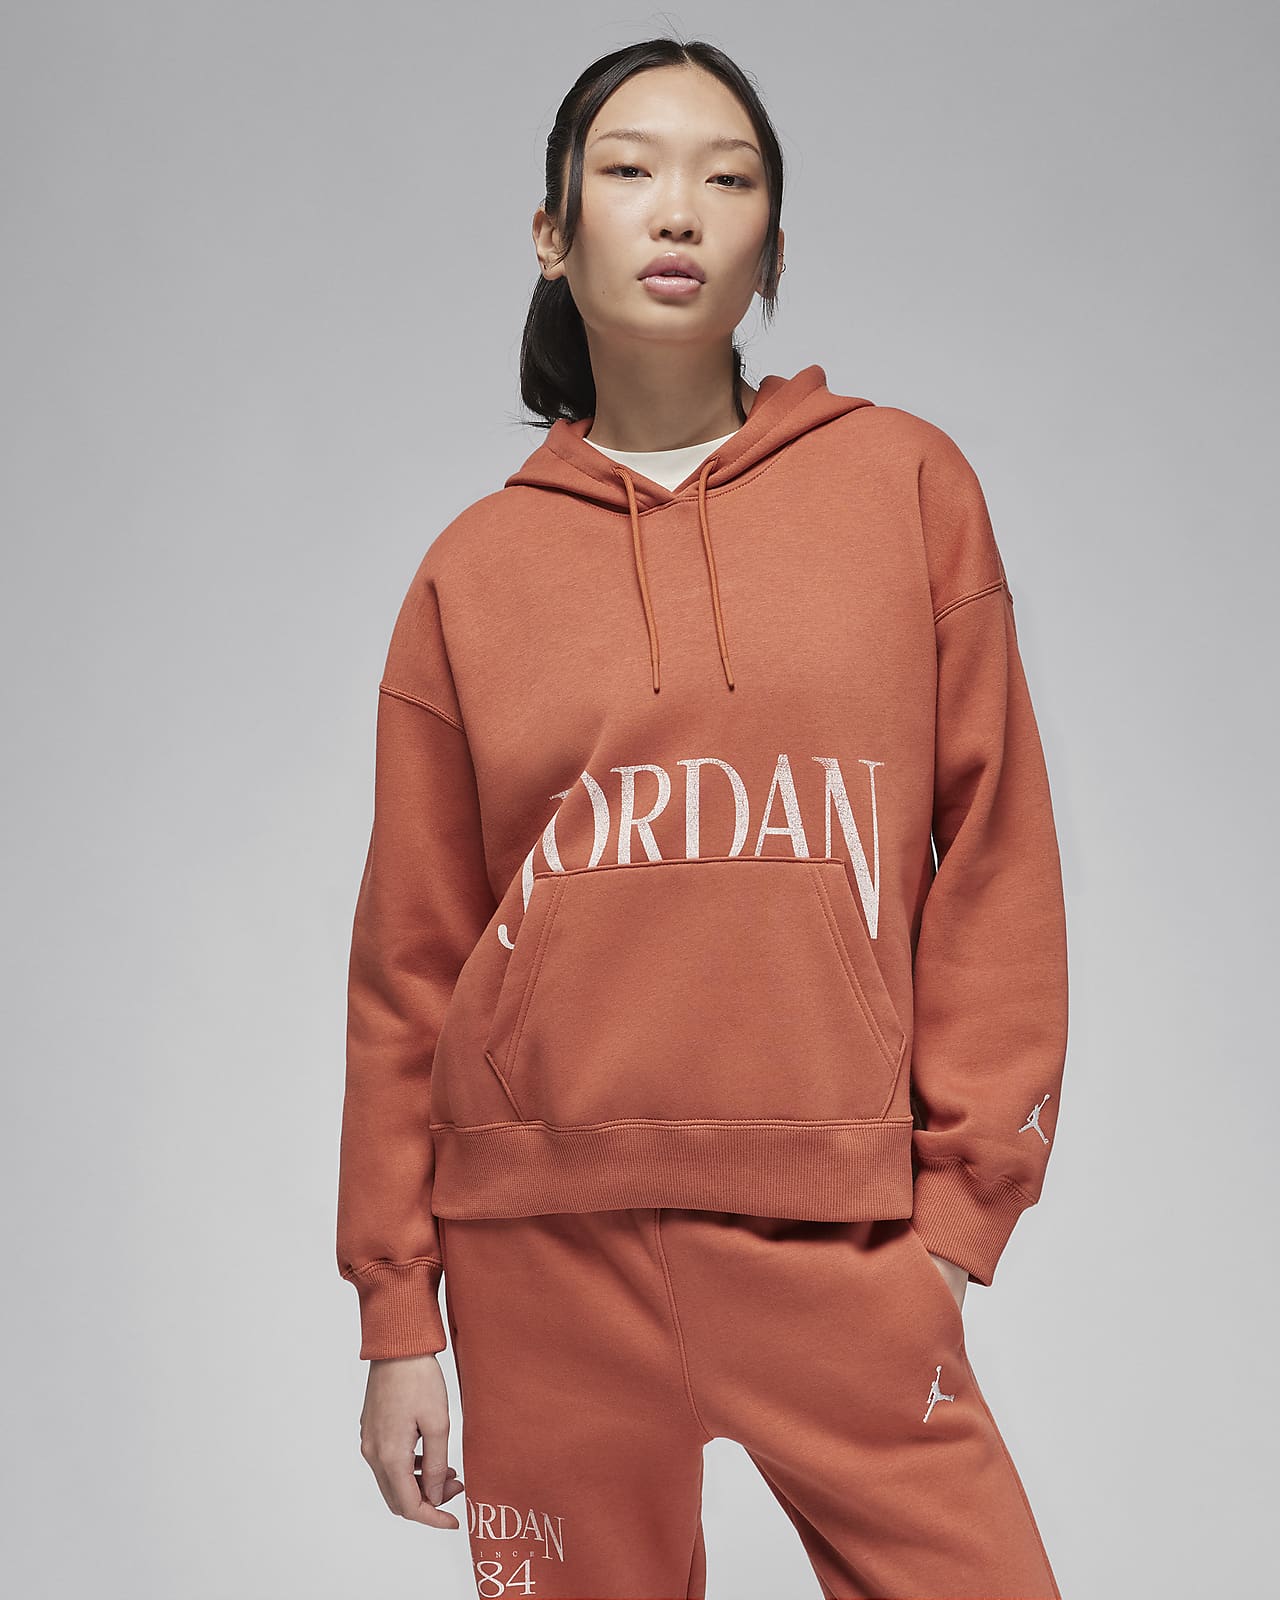 Jordan Brooklyn Fleece Women's Pullover Hoodie